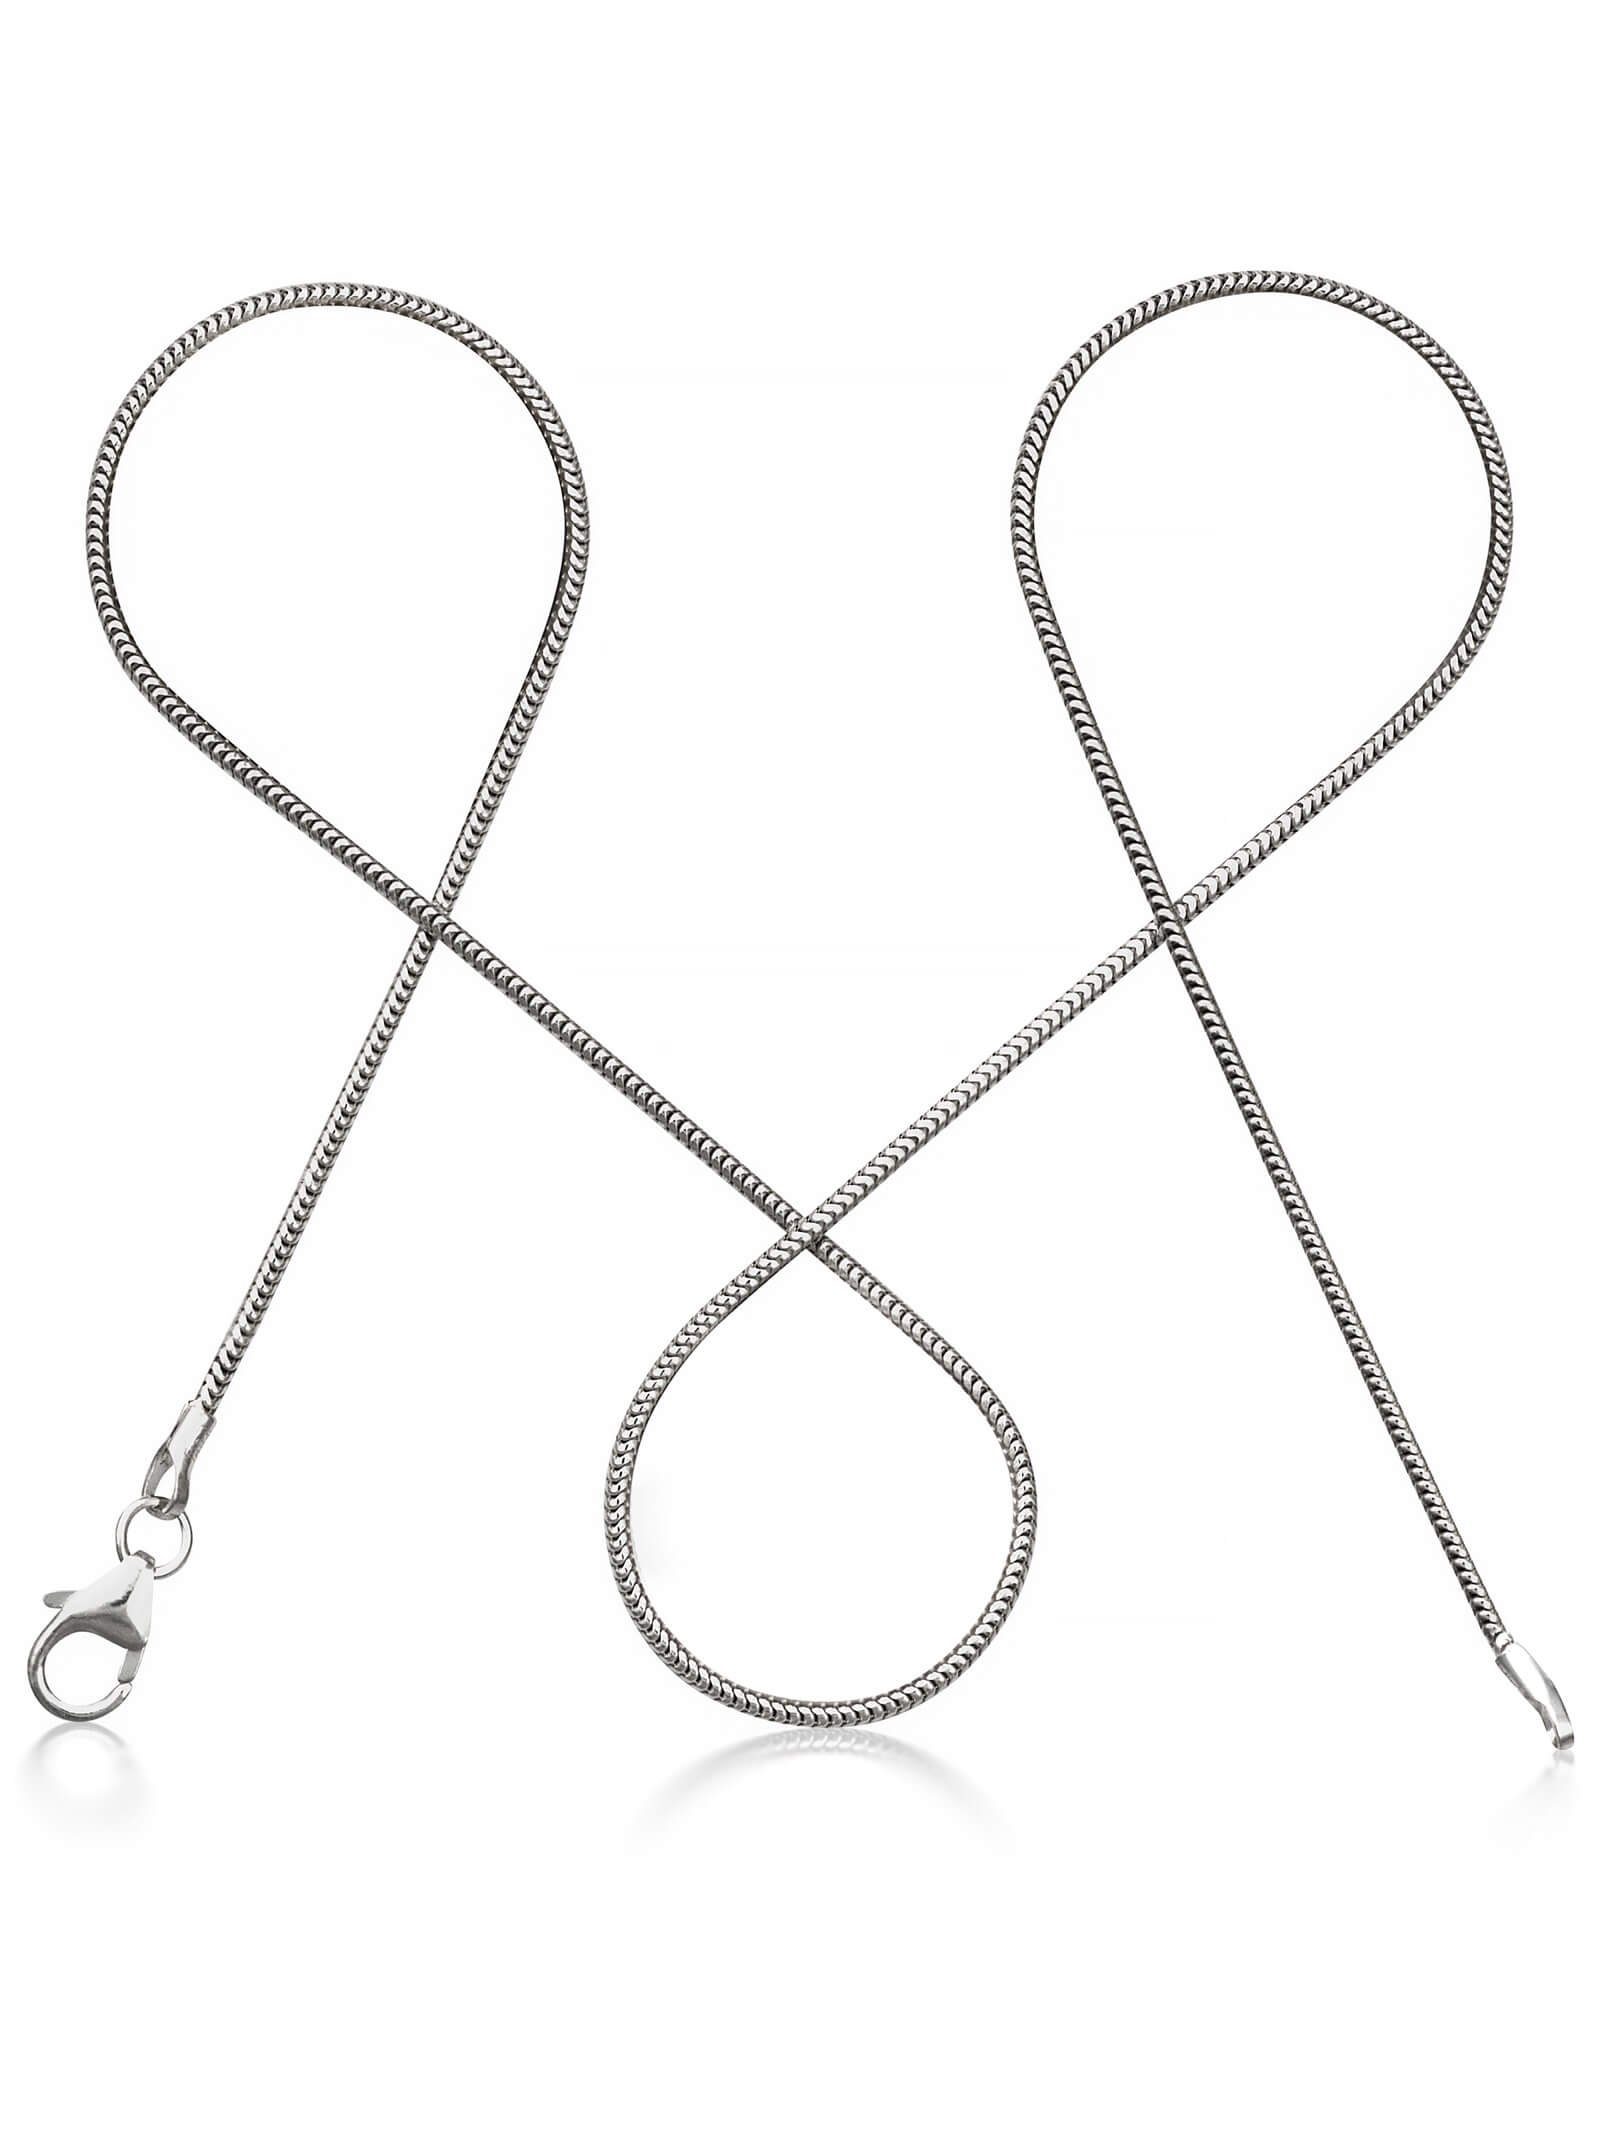 modabilé Silberkette Schlangenkette HEARTFELT, Damen Halskette 1,2mm, 60cm, Sterling Silber 925, Made in Germany